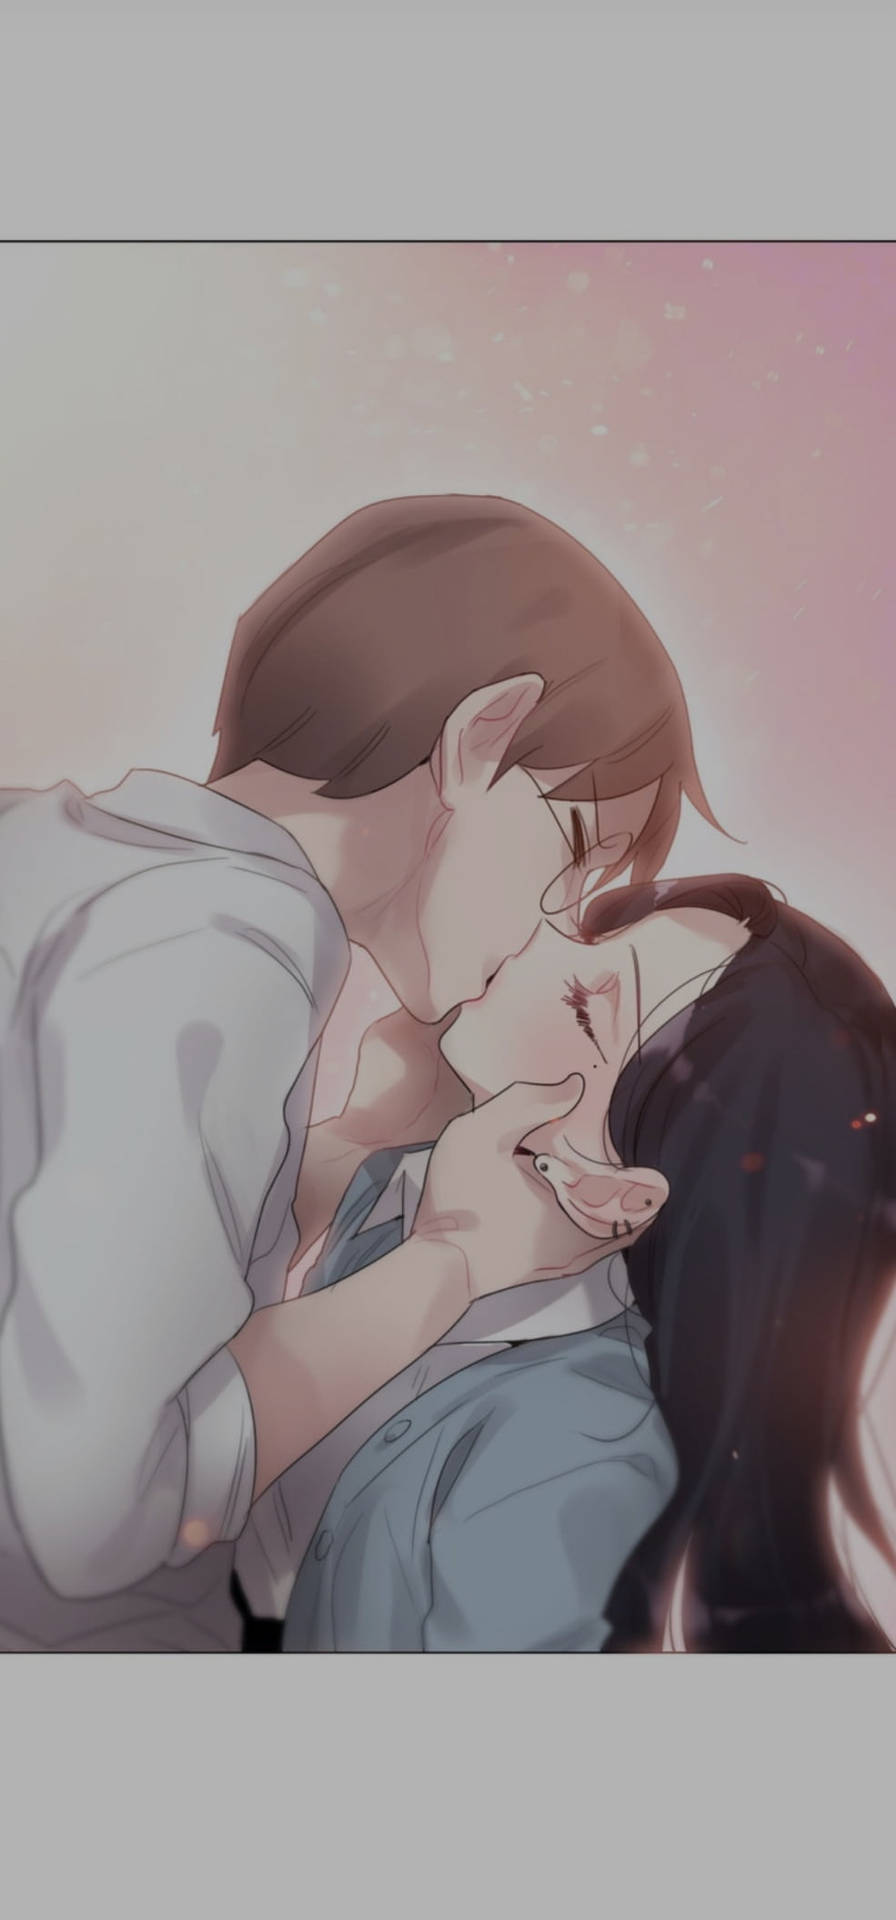 Passionate Anime Couple Kiss Phone Wallpaper